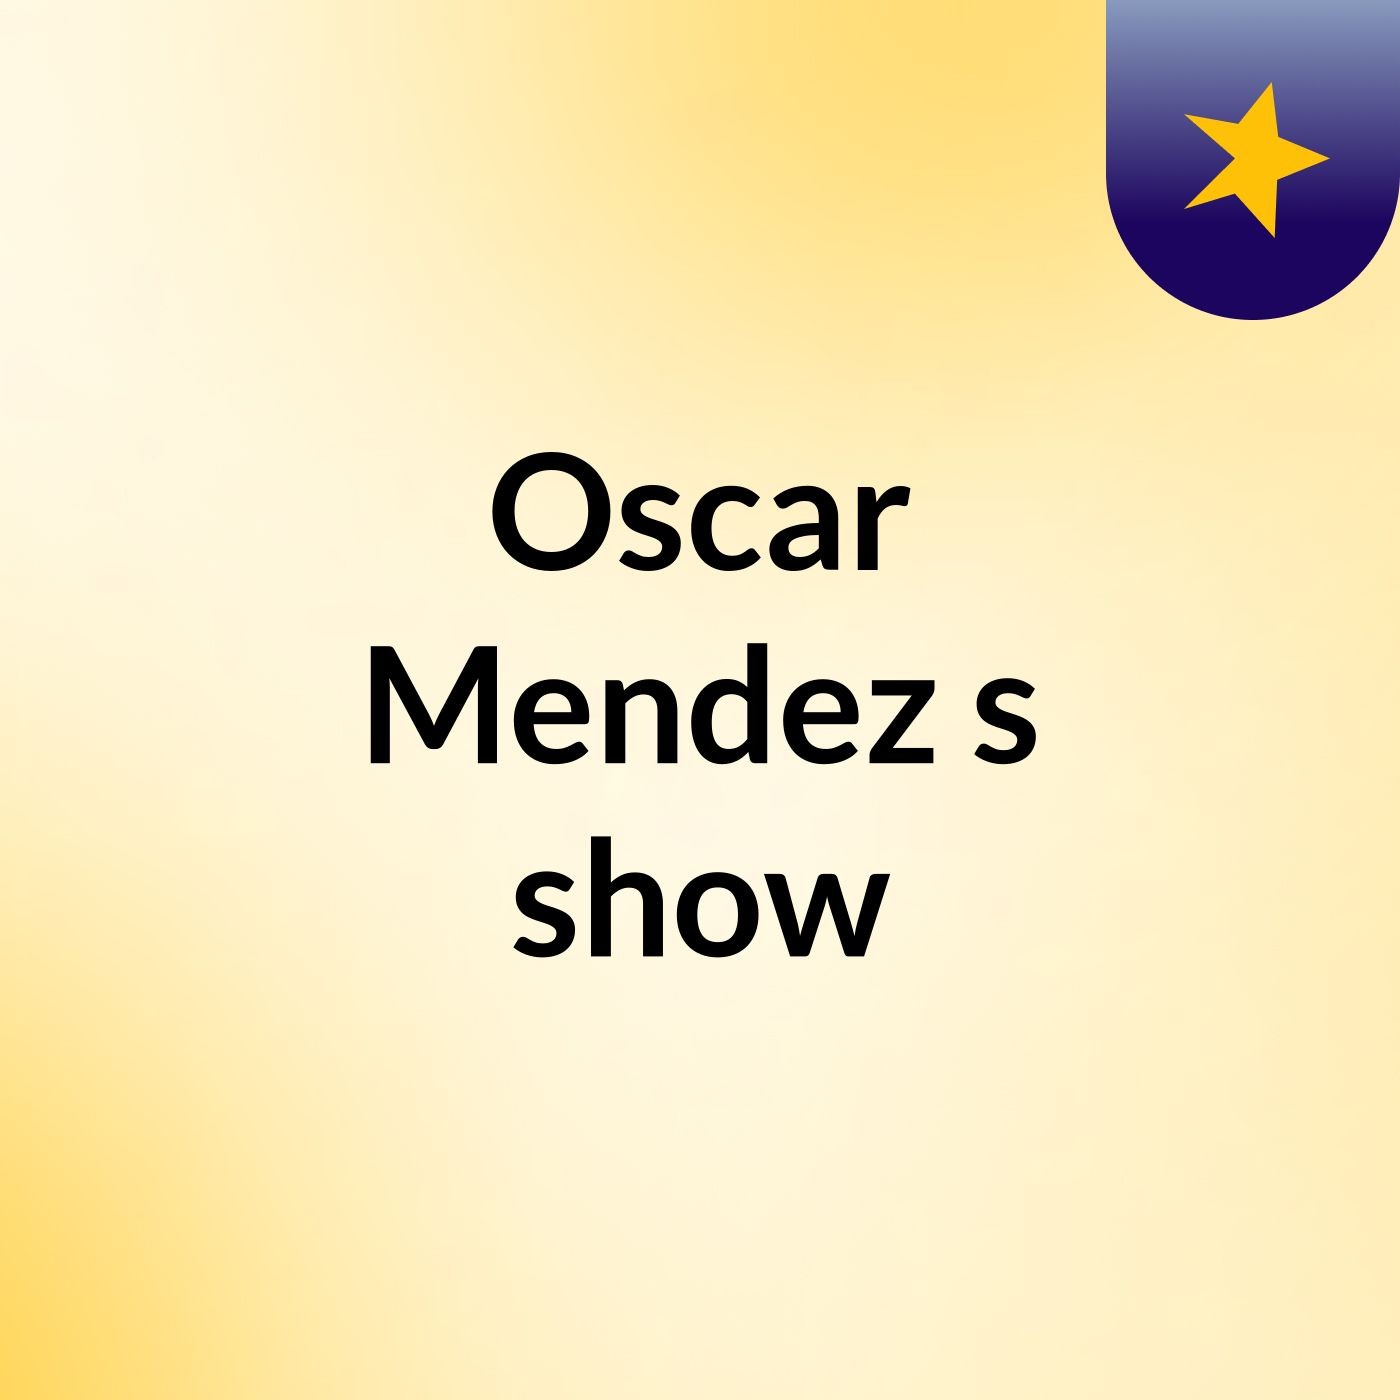 Oscar Mendez's show